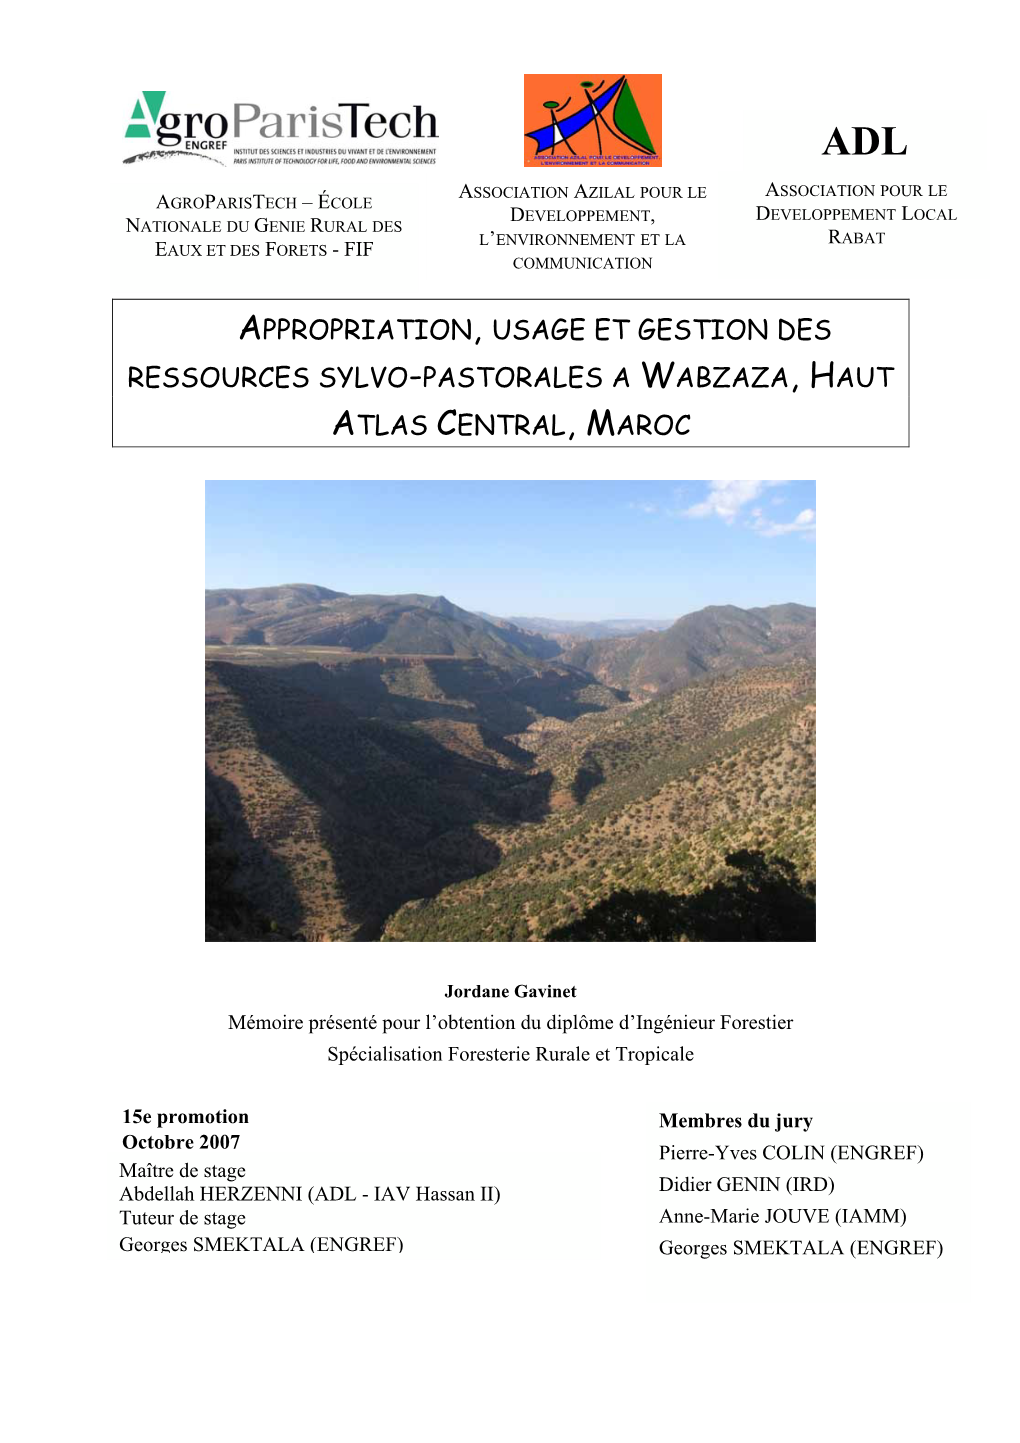 Appropriation, Usage Et Gestion Des Ressources Sylvo-Pastorales a Wabzaza, Haut Atlas Central, Maroc